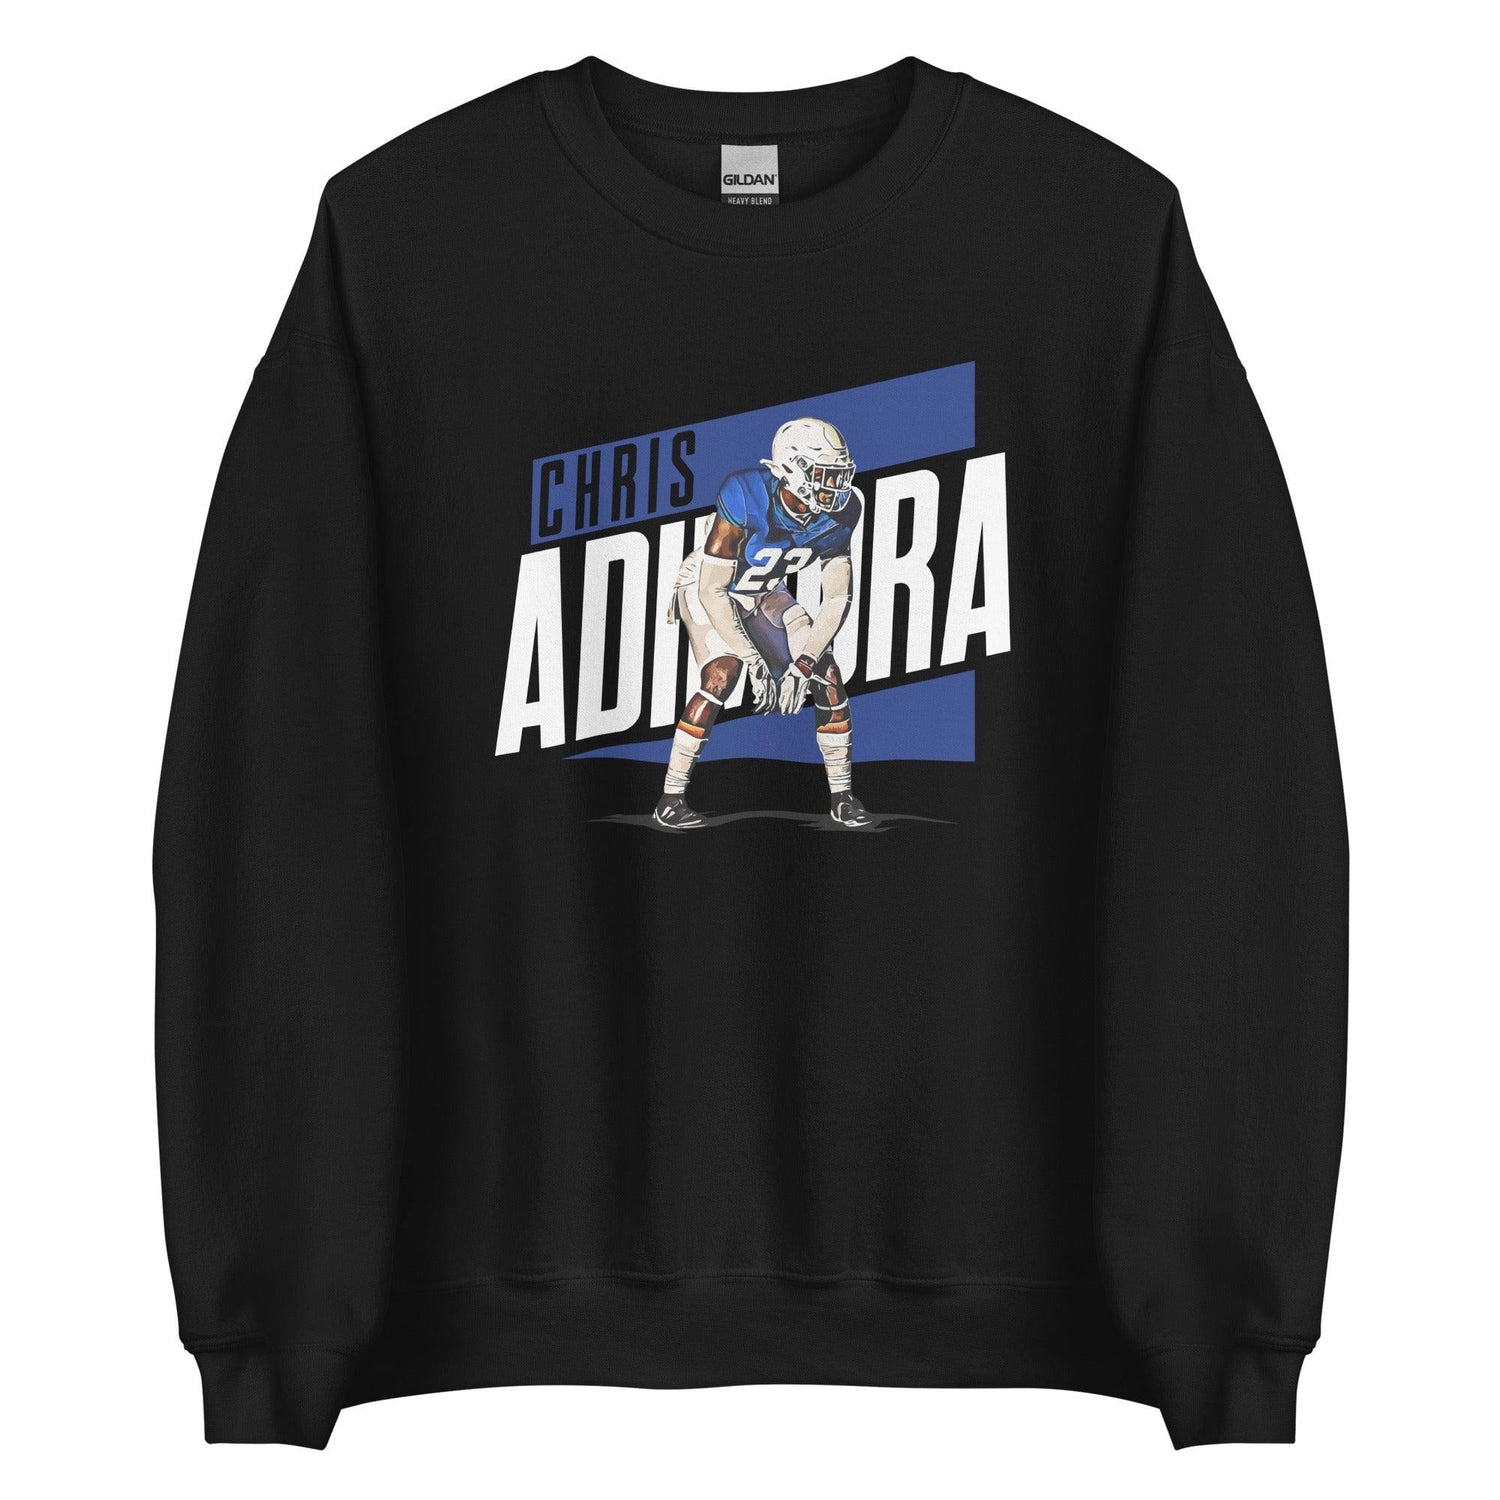 Chris Adimora “Gameday” Sweatshirt - Fan Arch